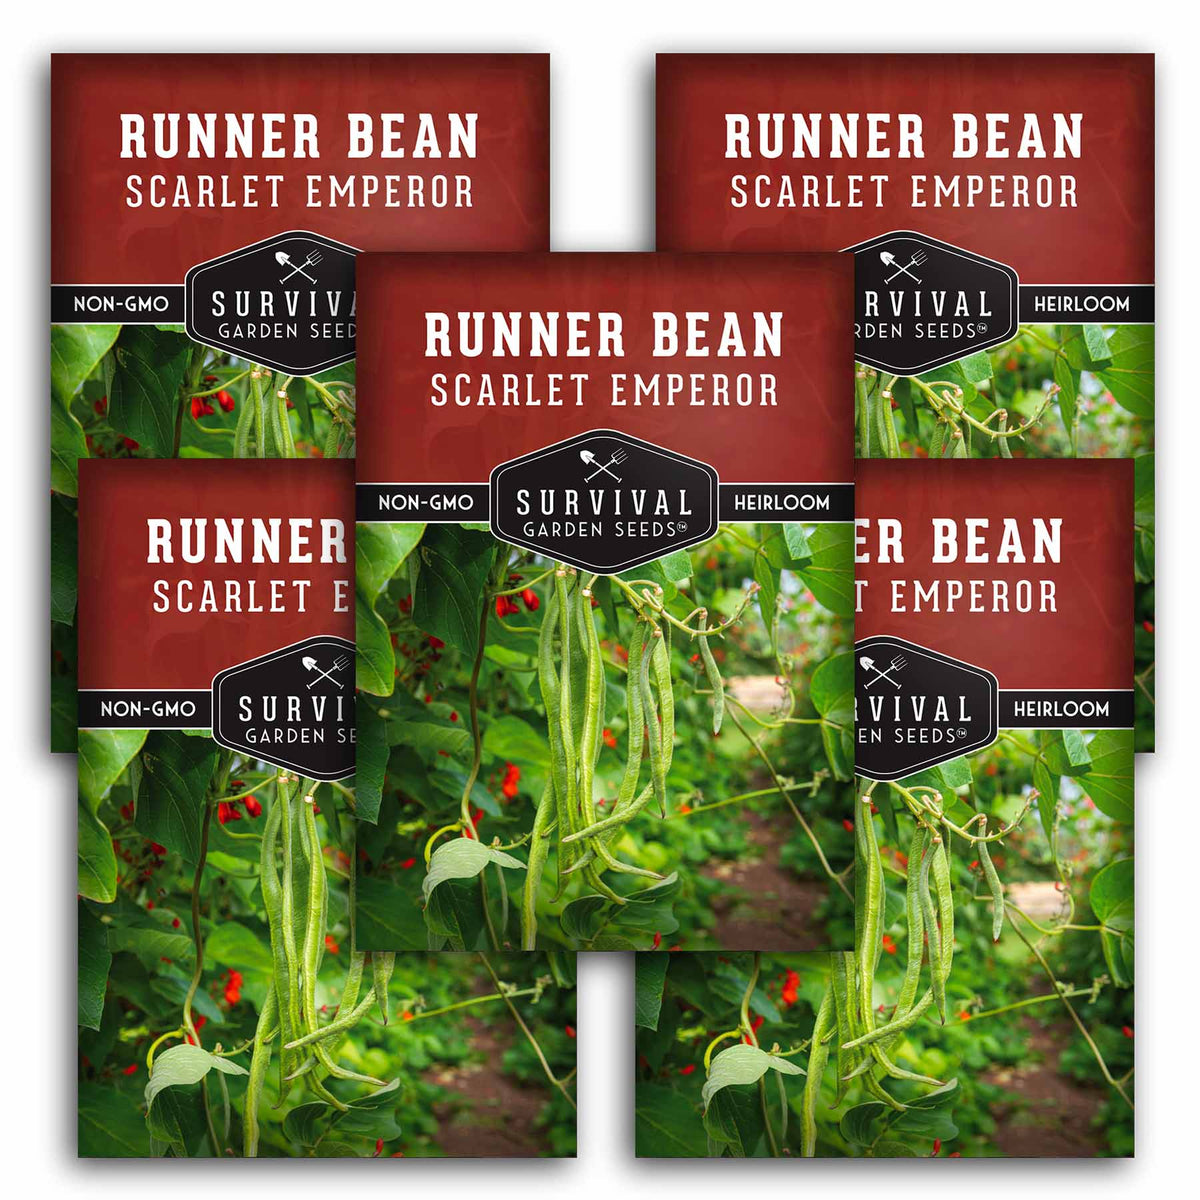 5 packets of Scarlet Emperor Runner Bean seeds